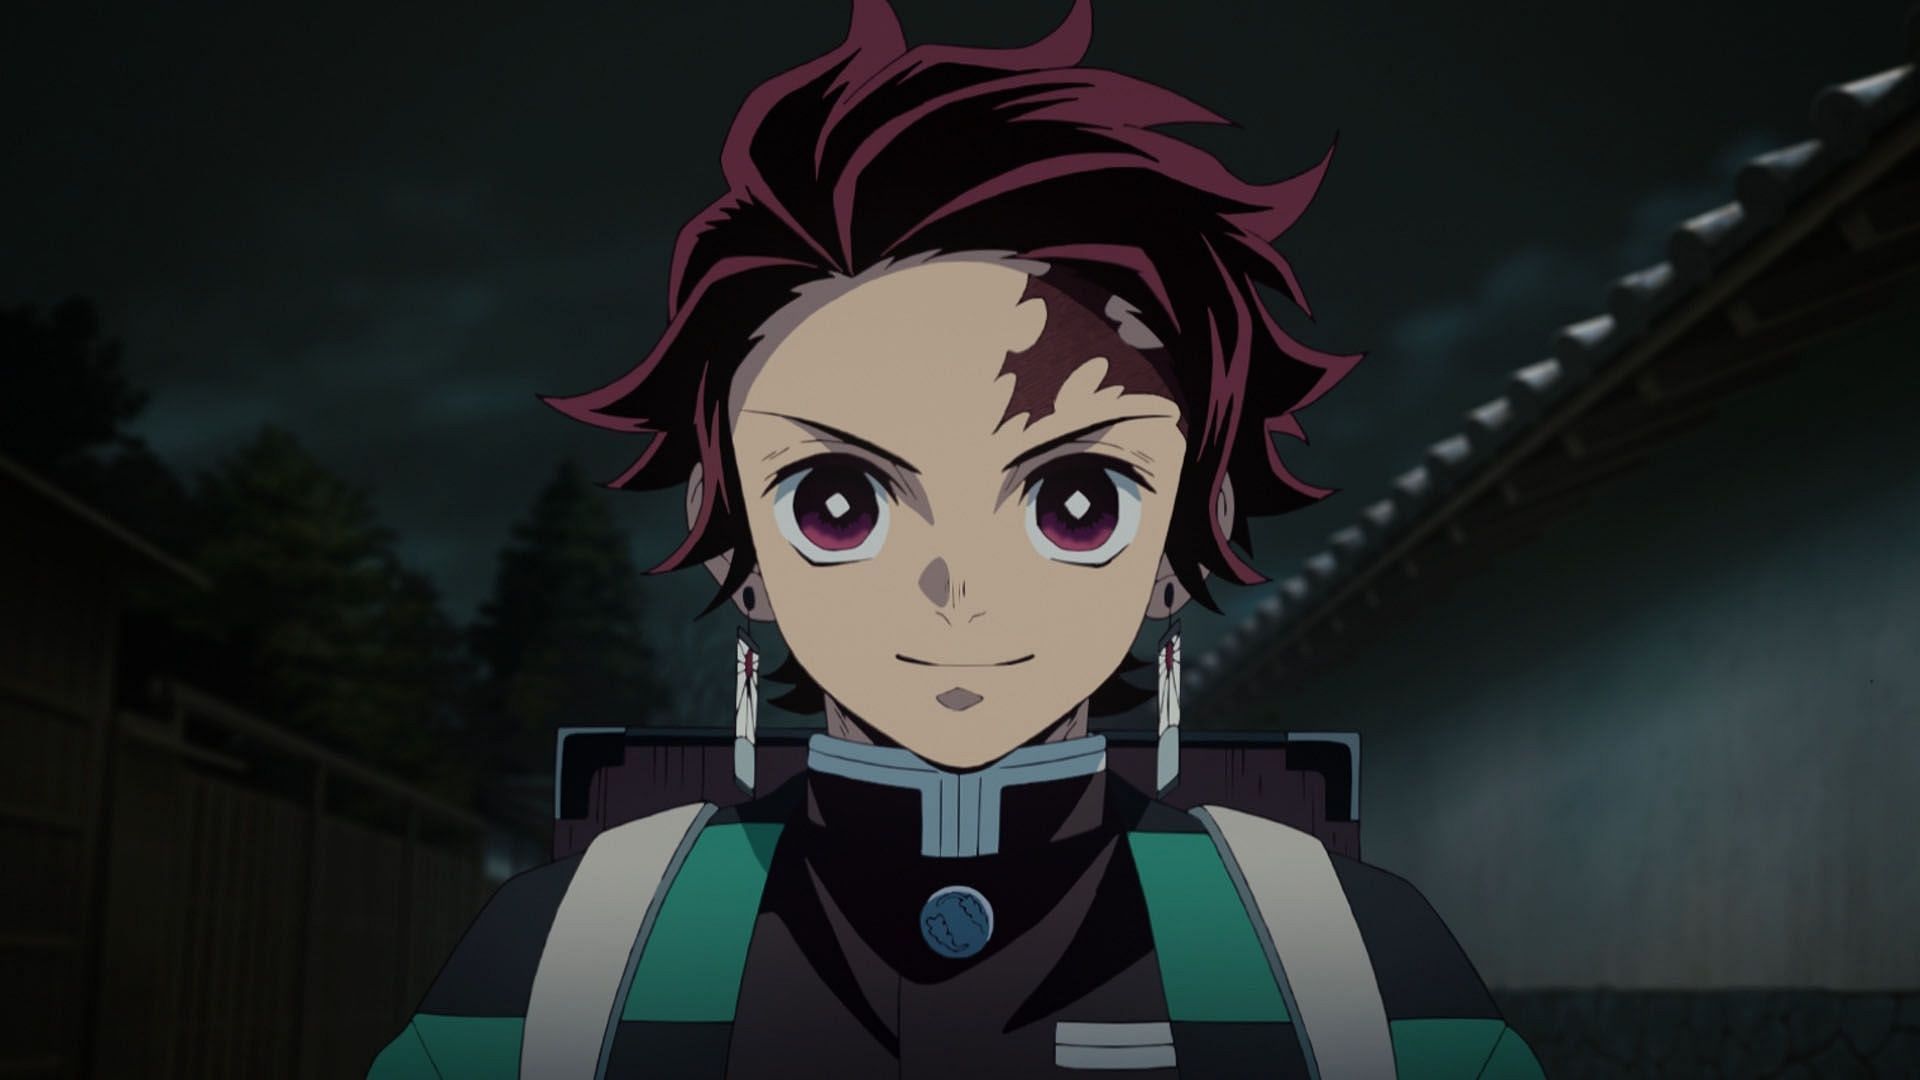 Tanjiro as seen in the anime series (Image via Ufotable)